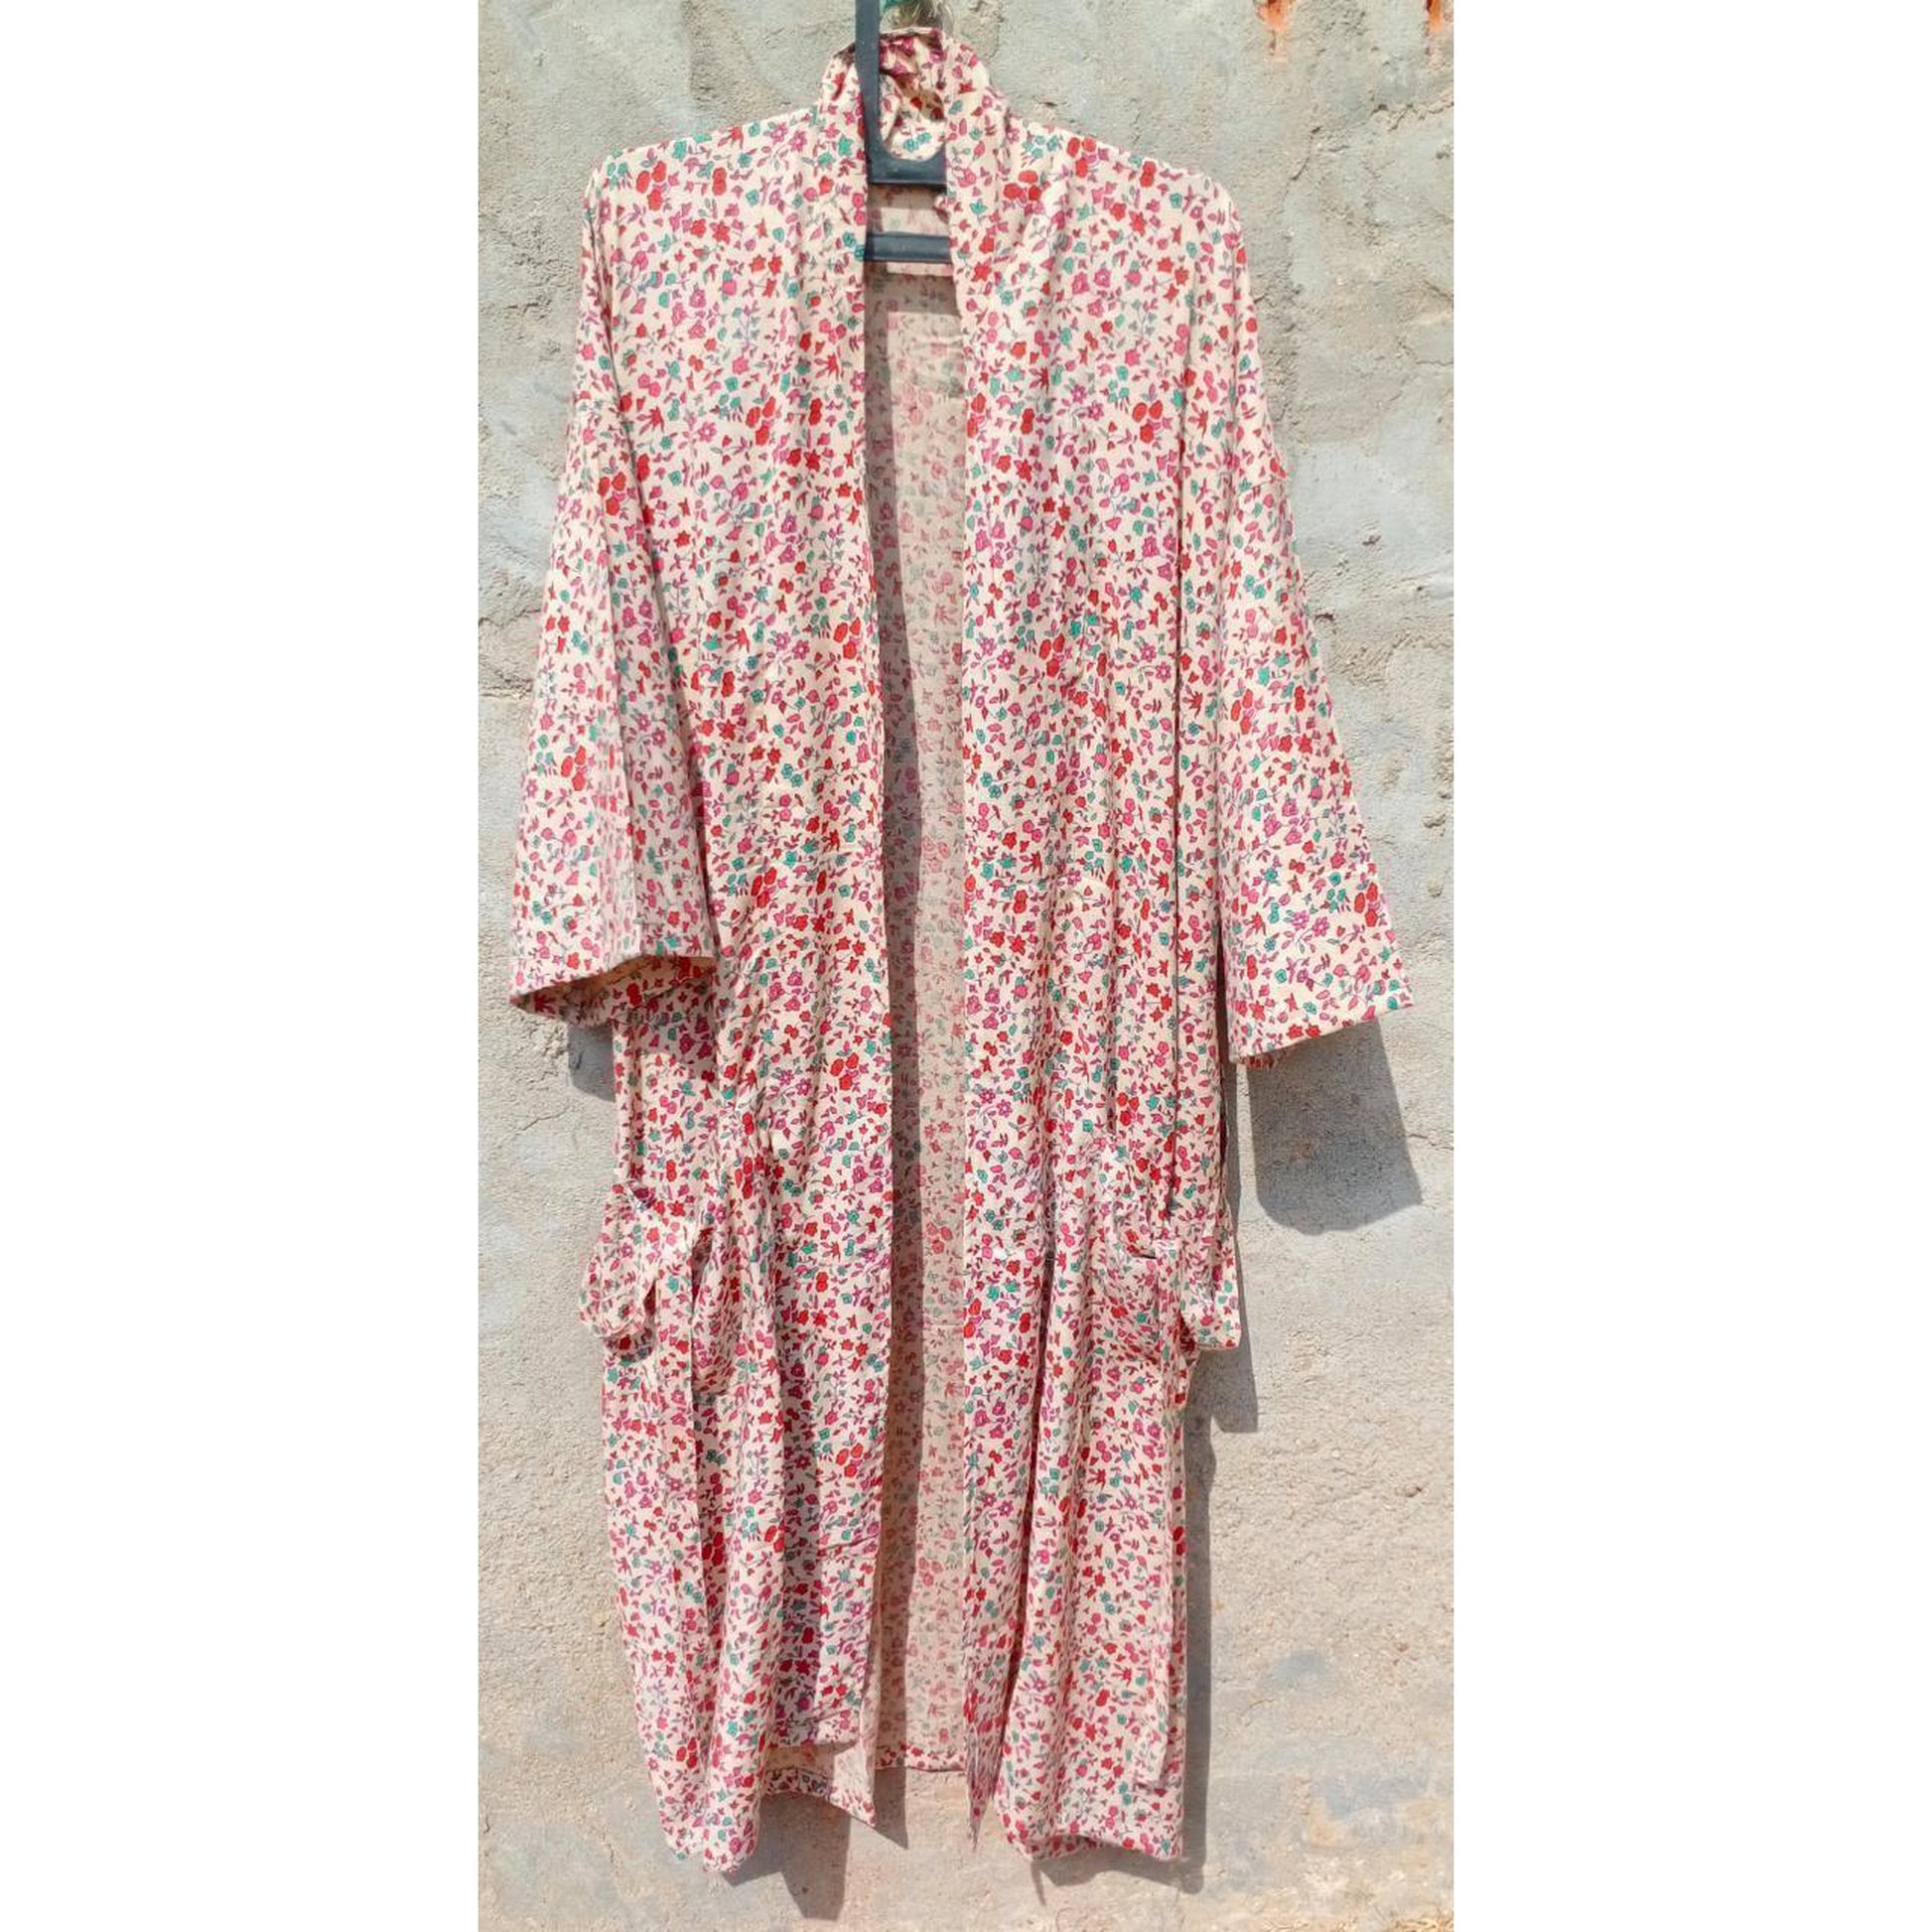 Kimono Bath Robes/ Night Suit - Rayon orange - The Teal Thread